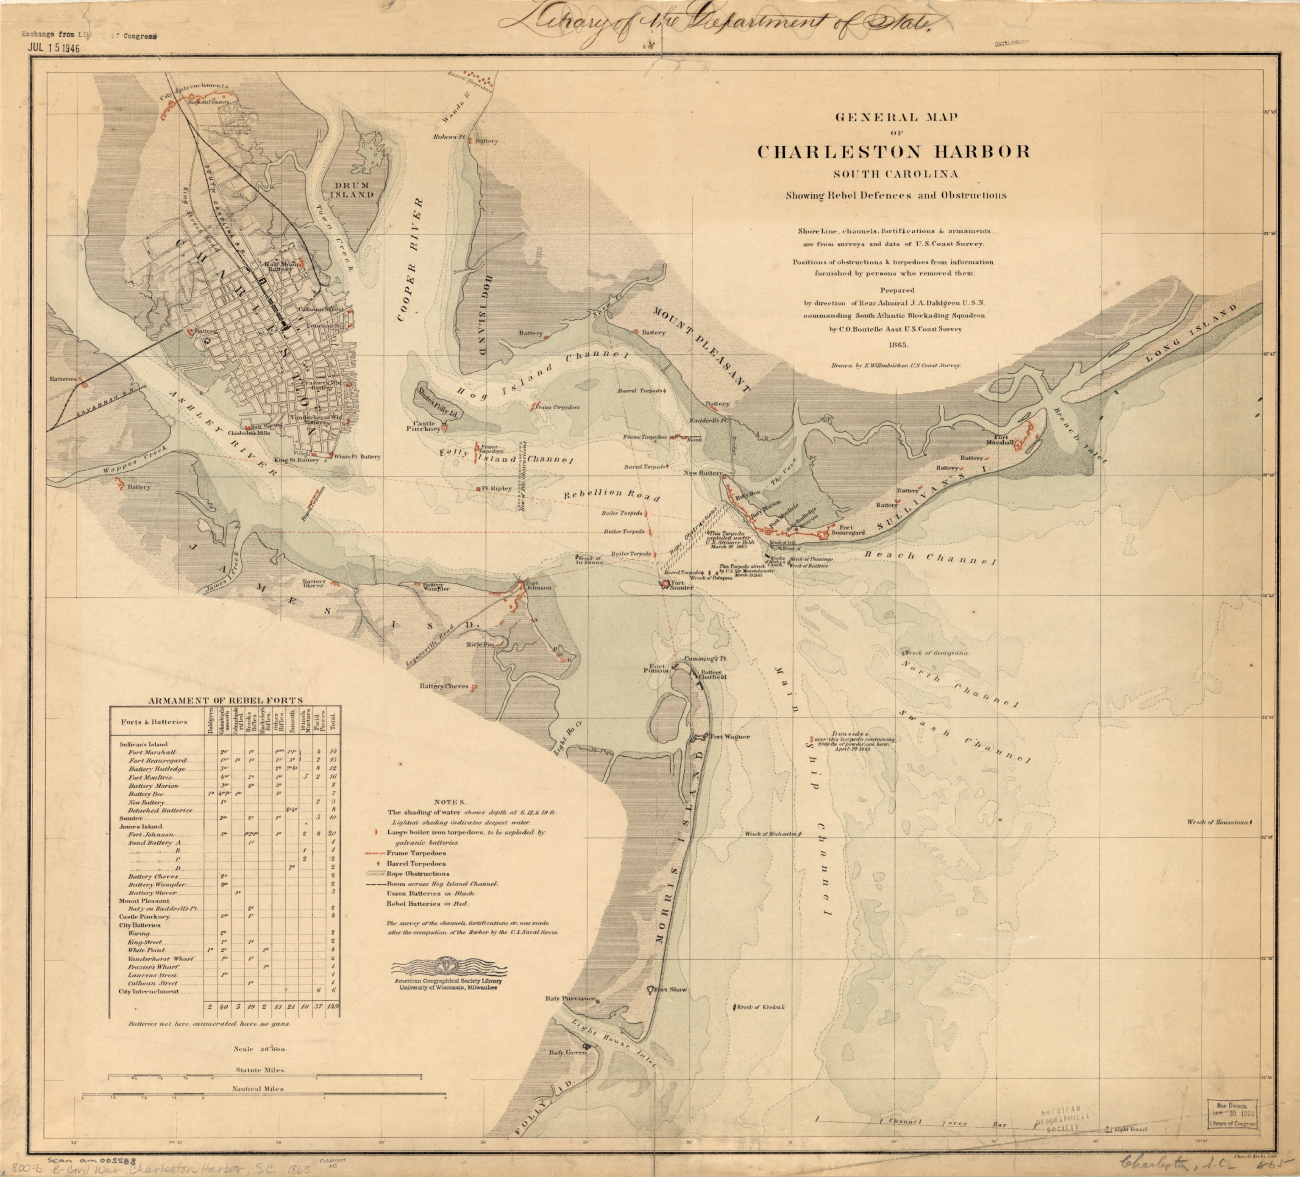 General Map of Charleston Harbor South Carolina Showing Rebel Defences andObstructions